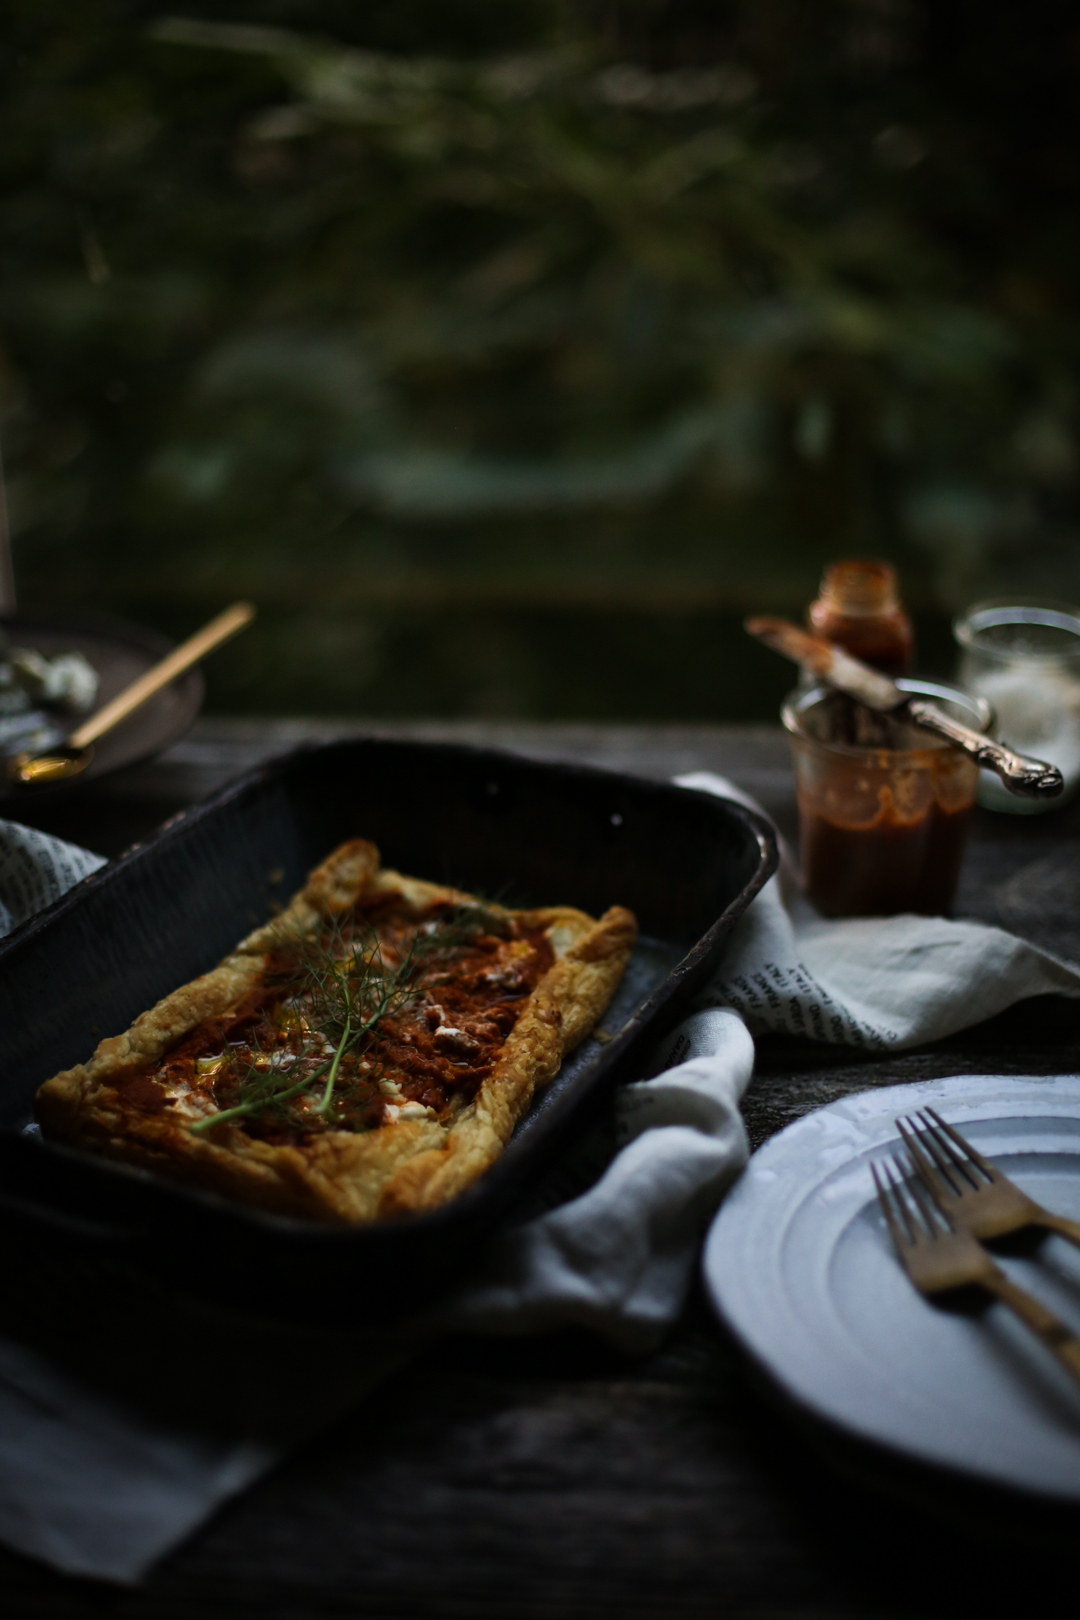 smoked-tomato-jam-goat-cheese-tart-recipe-photography-styling-by-christiann-koepke-of-christiannkoepke-com-8